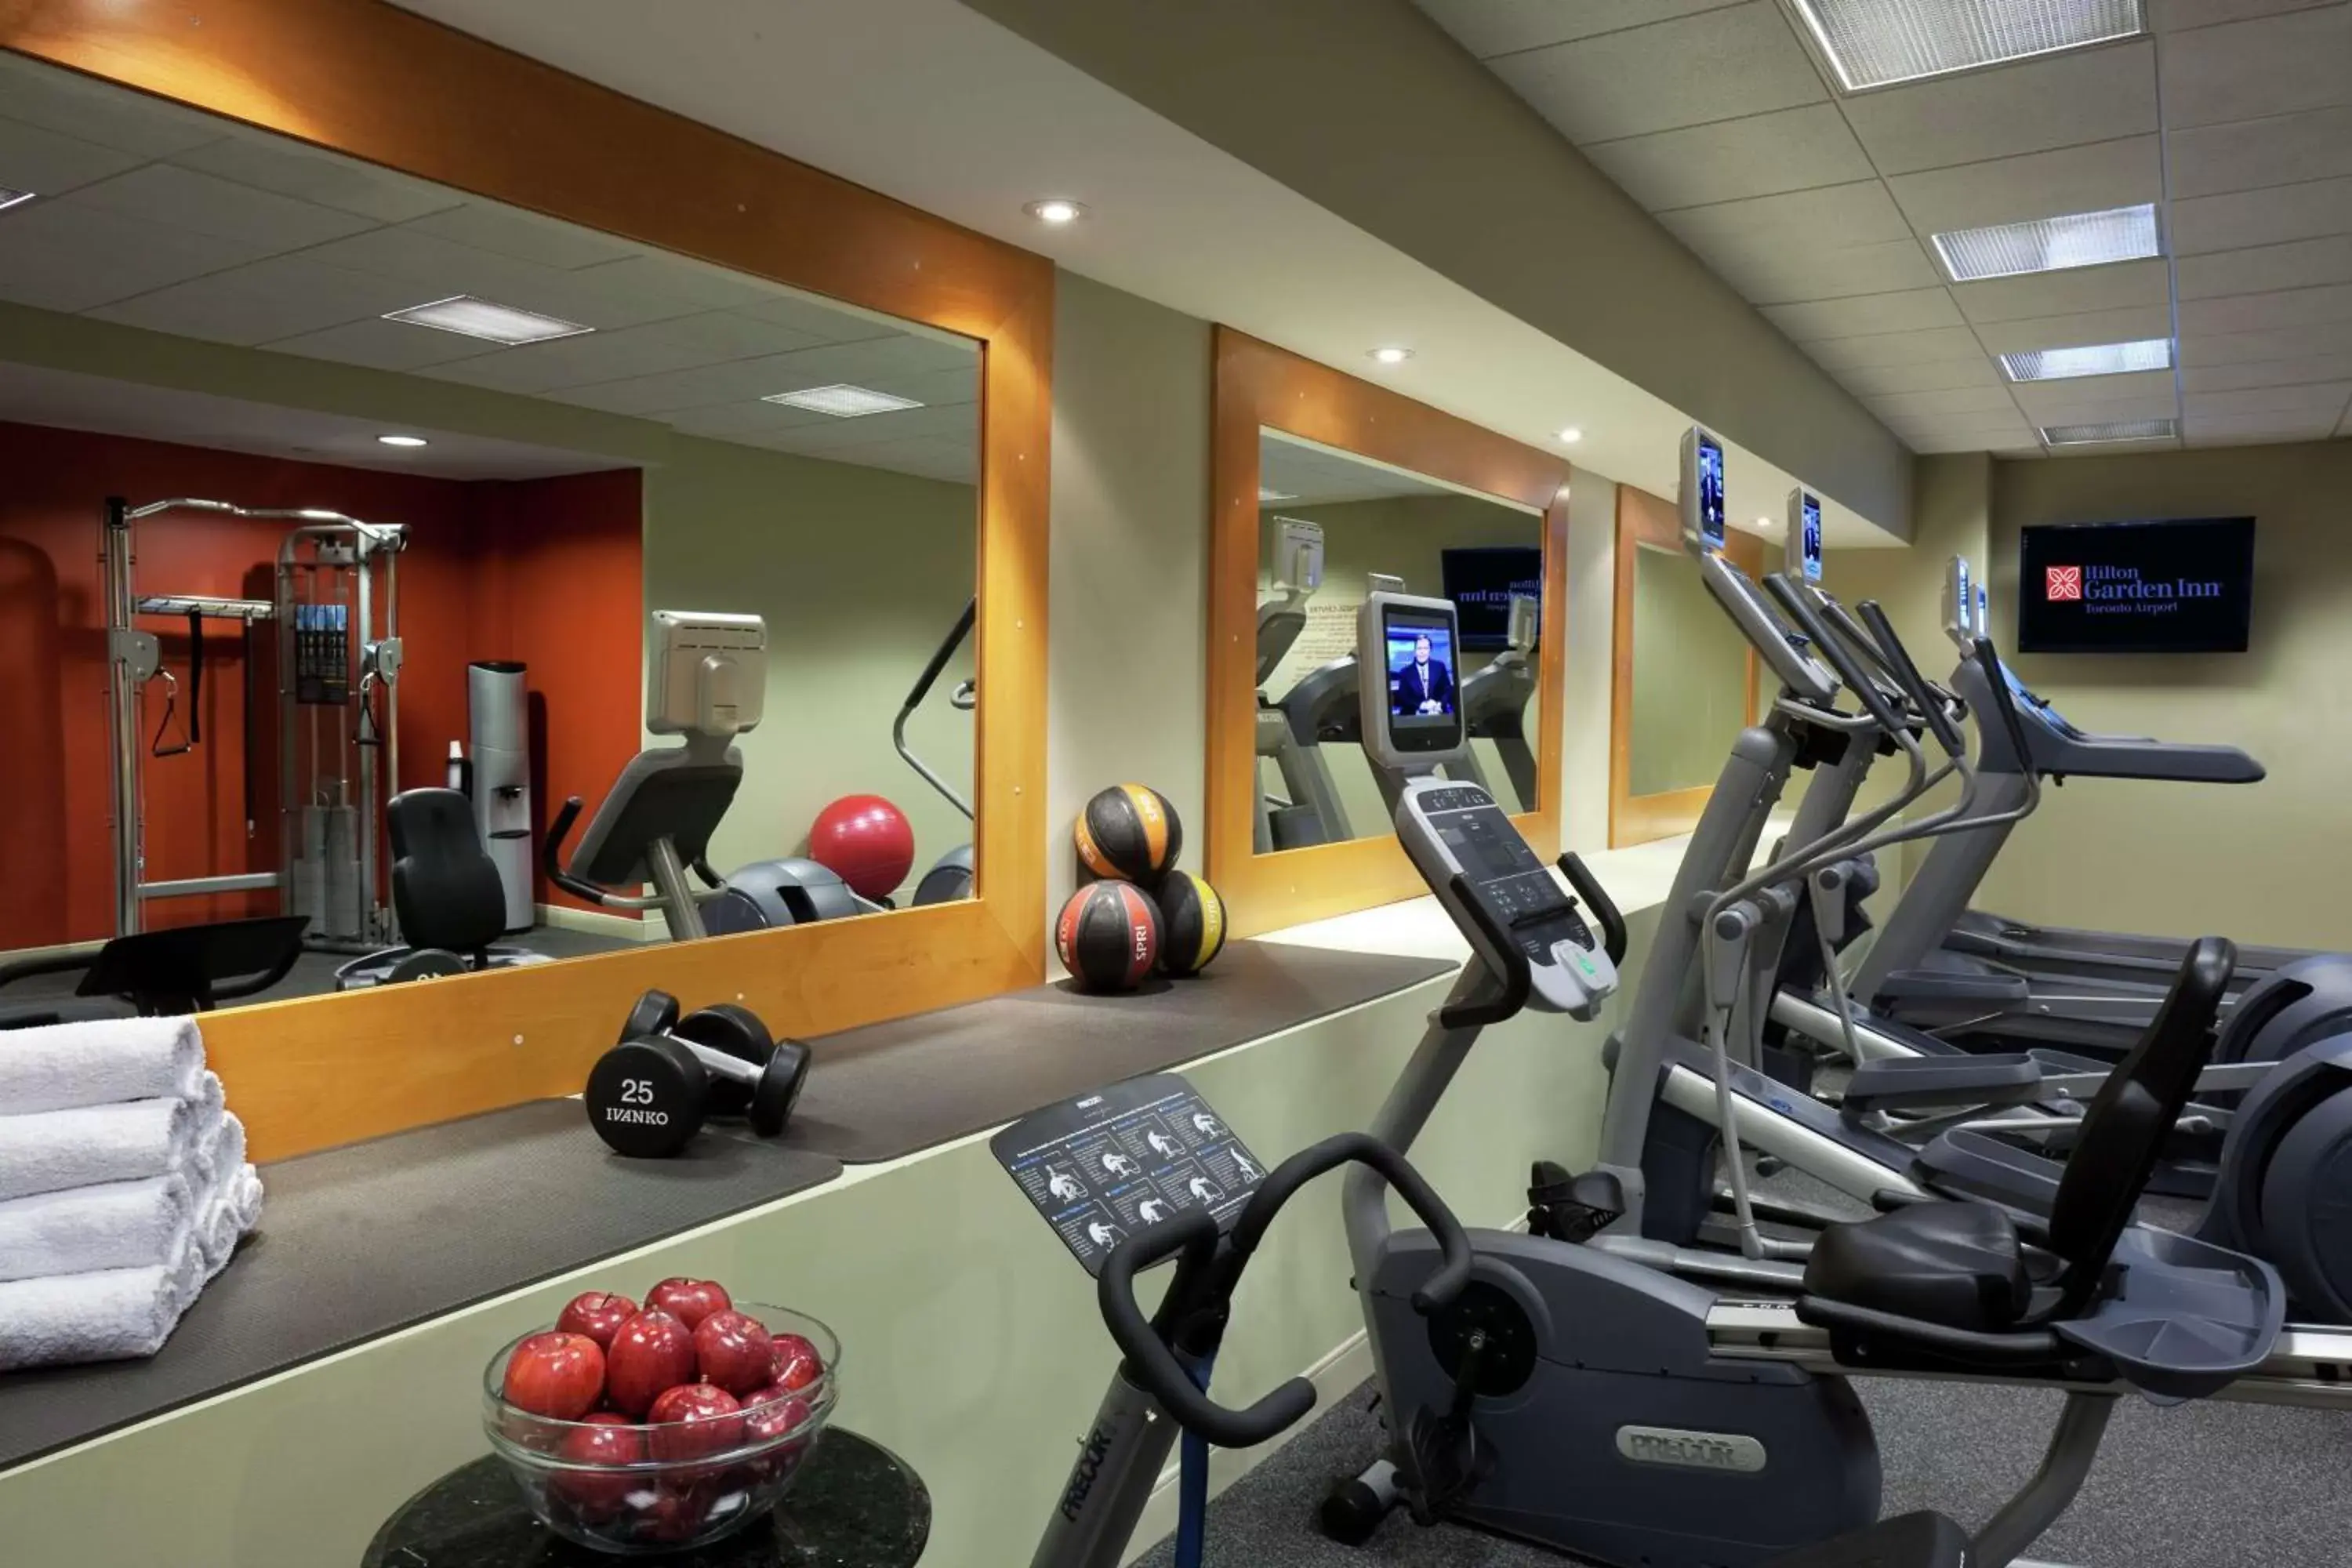 Fitness centre/facilities, Fitness Center/Facilities in Hilton Garden Inn Toronto Airport